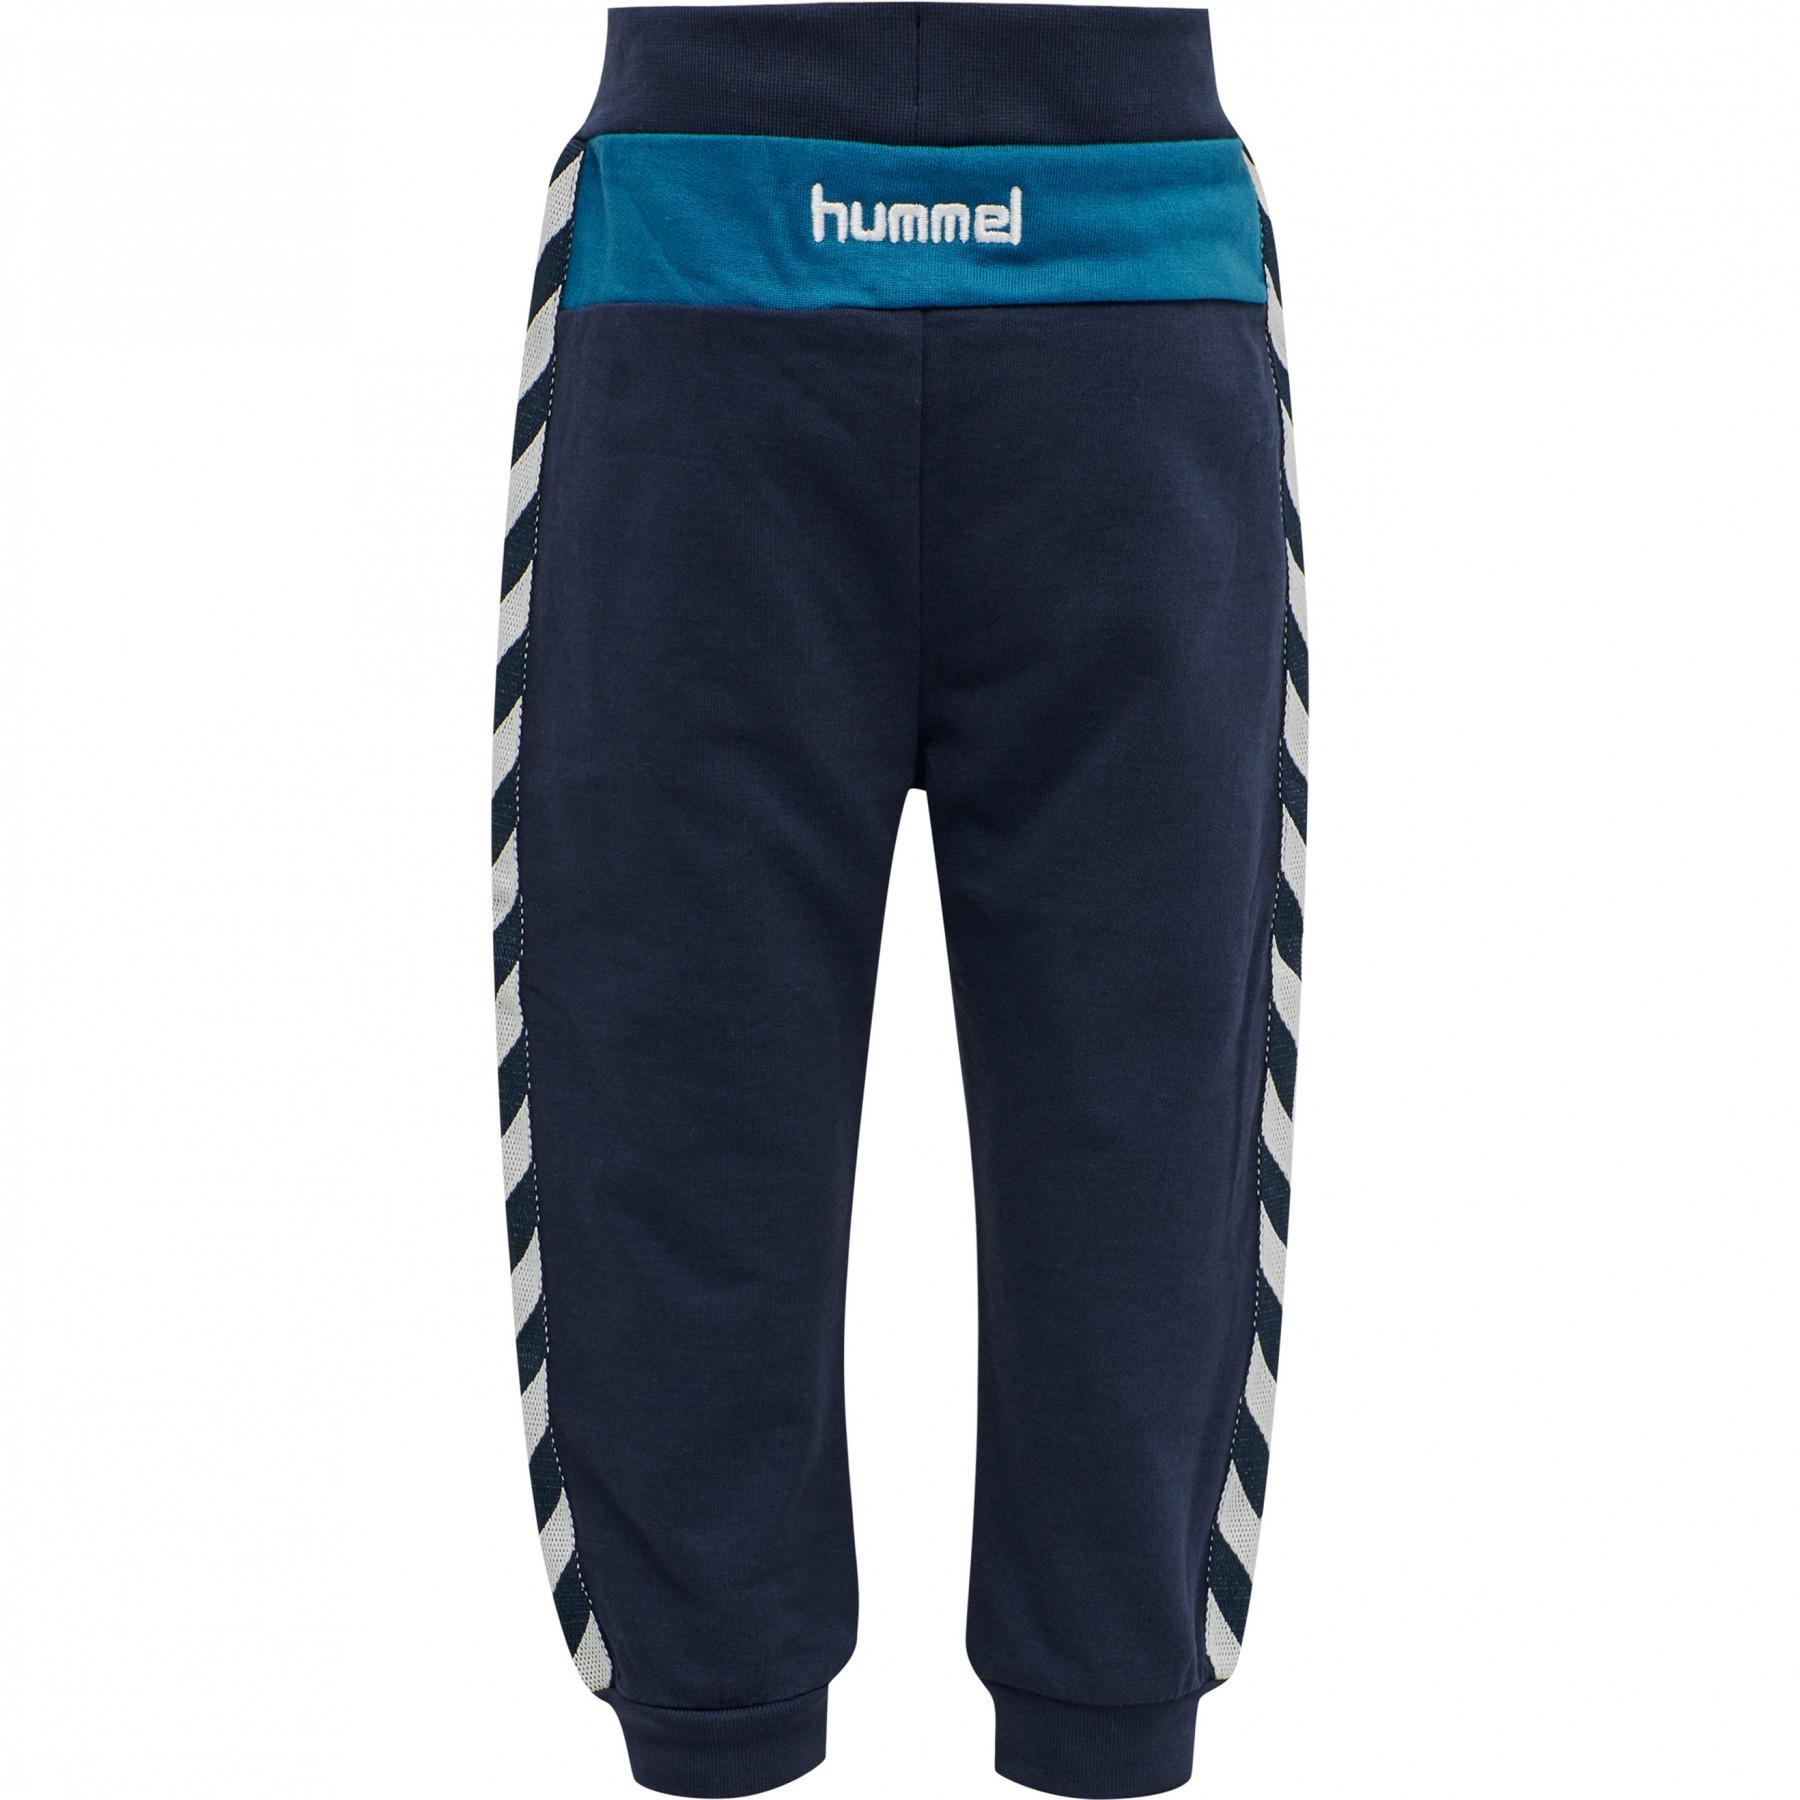 Children's trousers Hummel hmlnigel